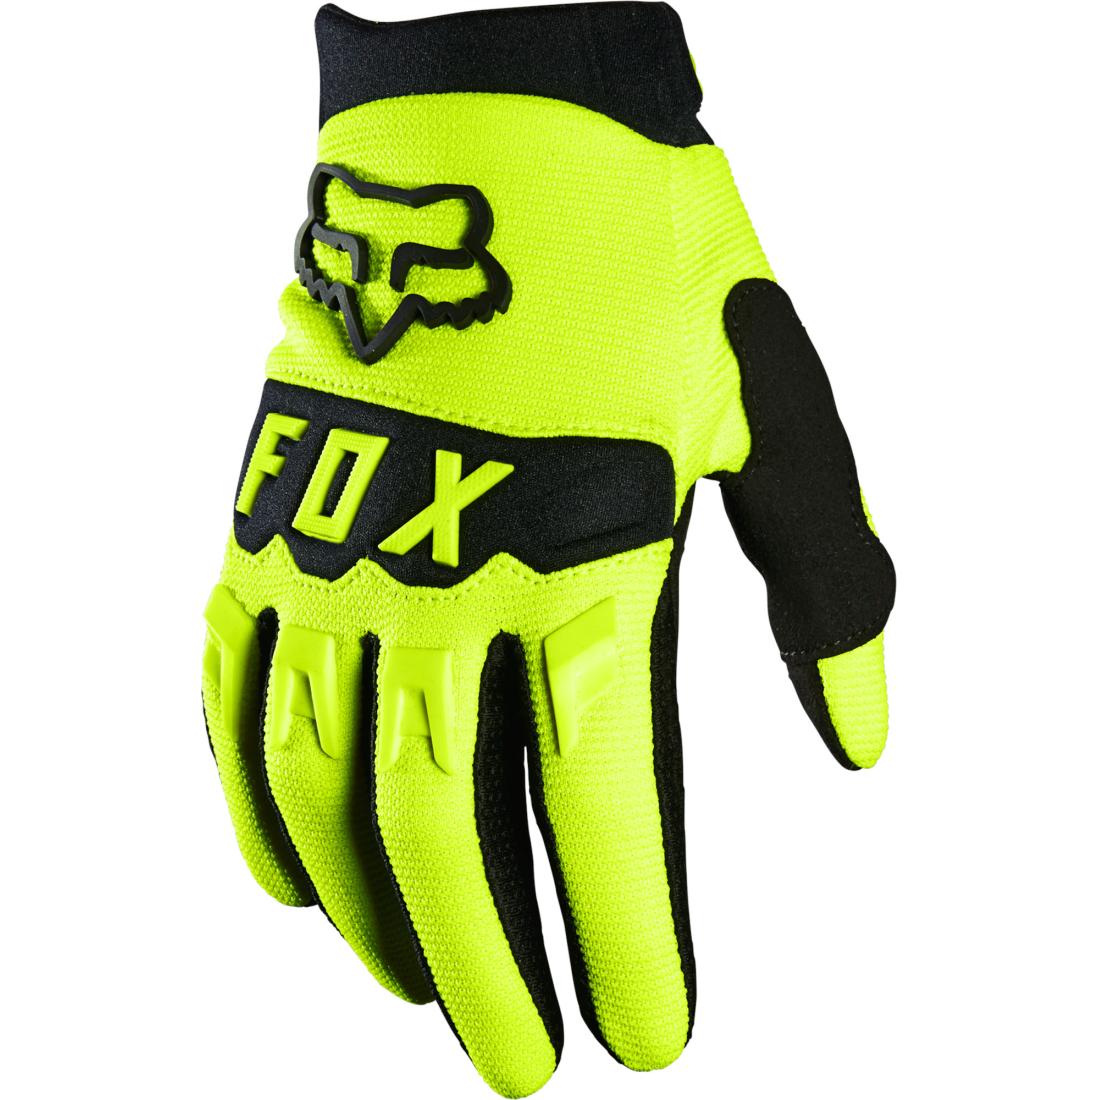 Yth Dirtpaw Glove Fluo Yellow